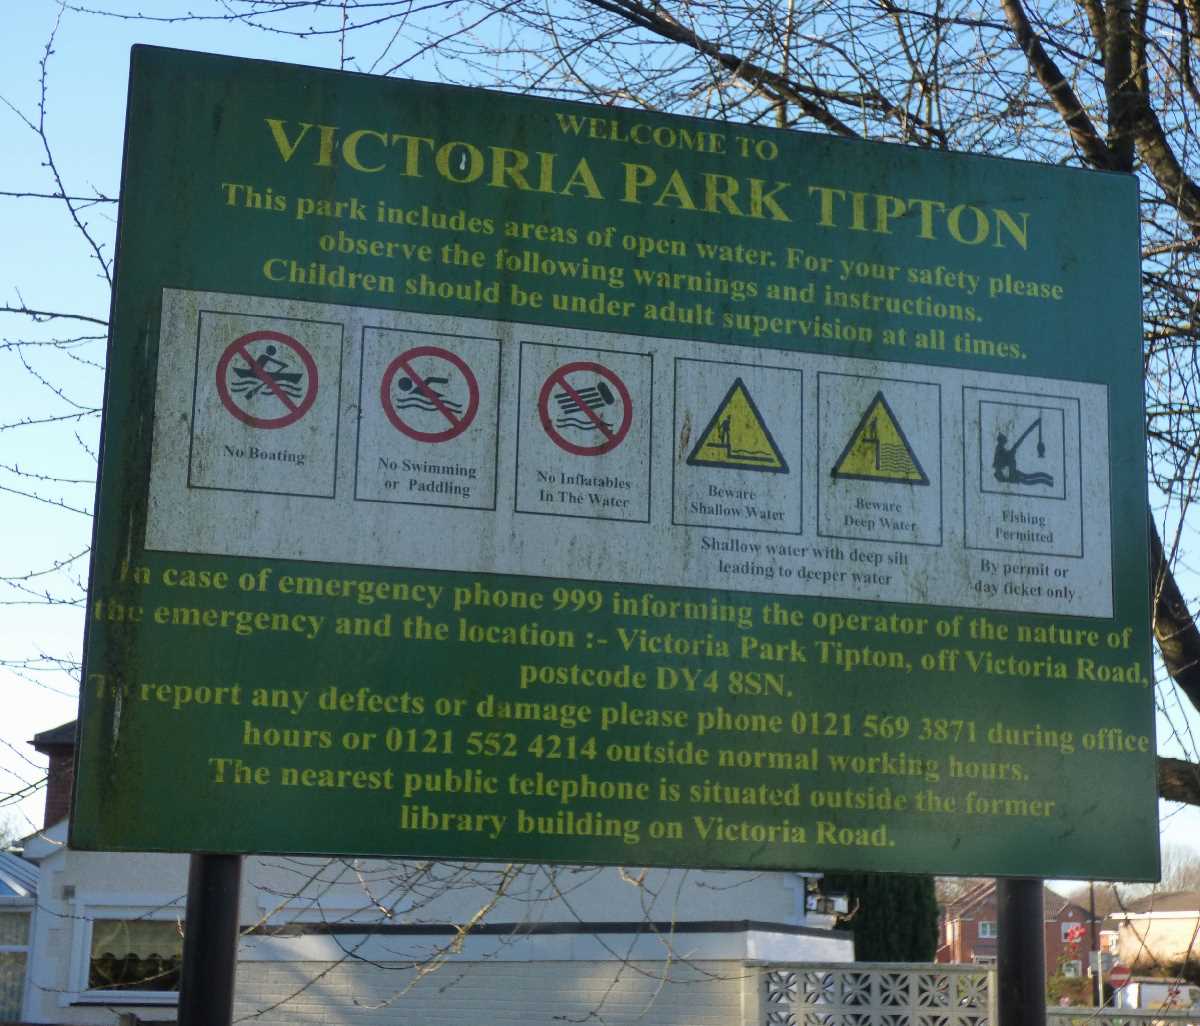 Victoria Park Tipton